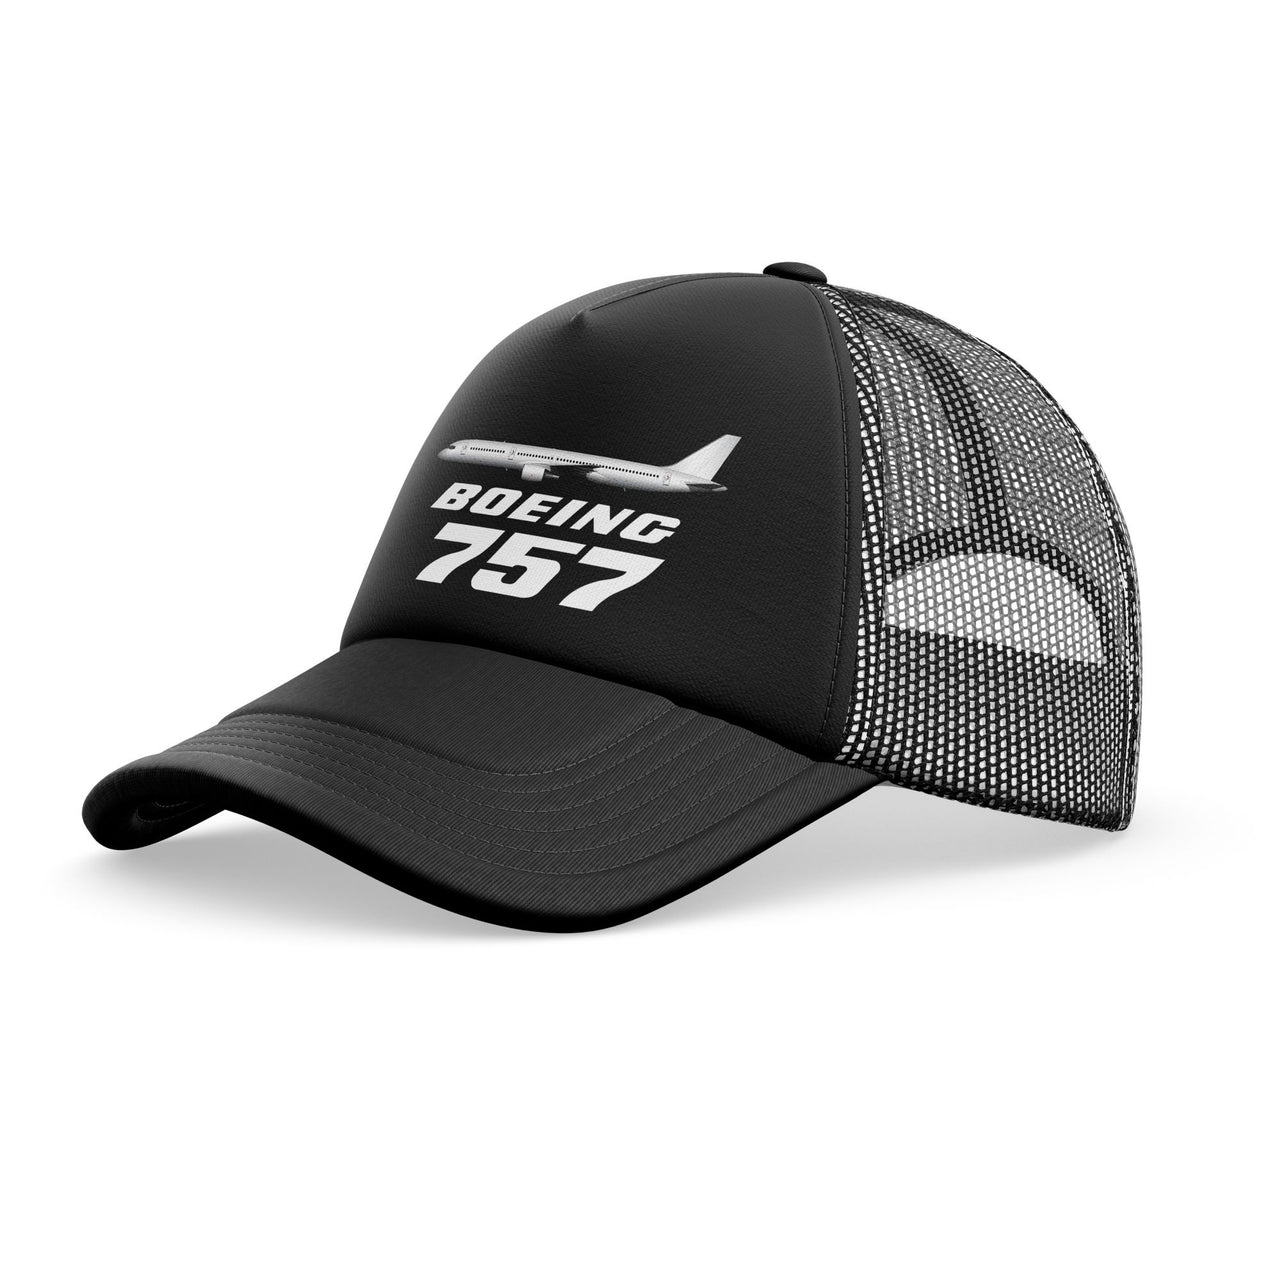 The Boeing 757 Designed Trucker Caps & Hats